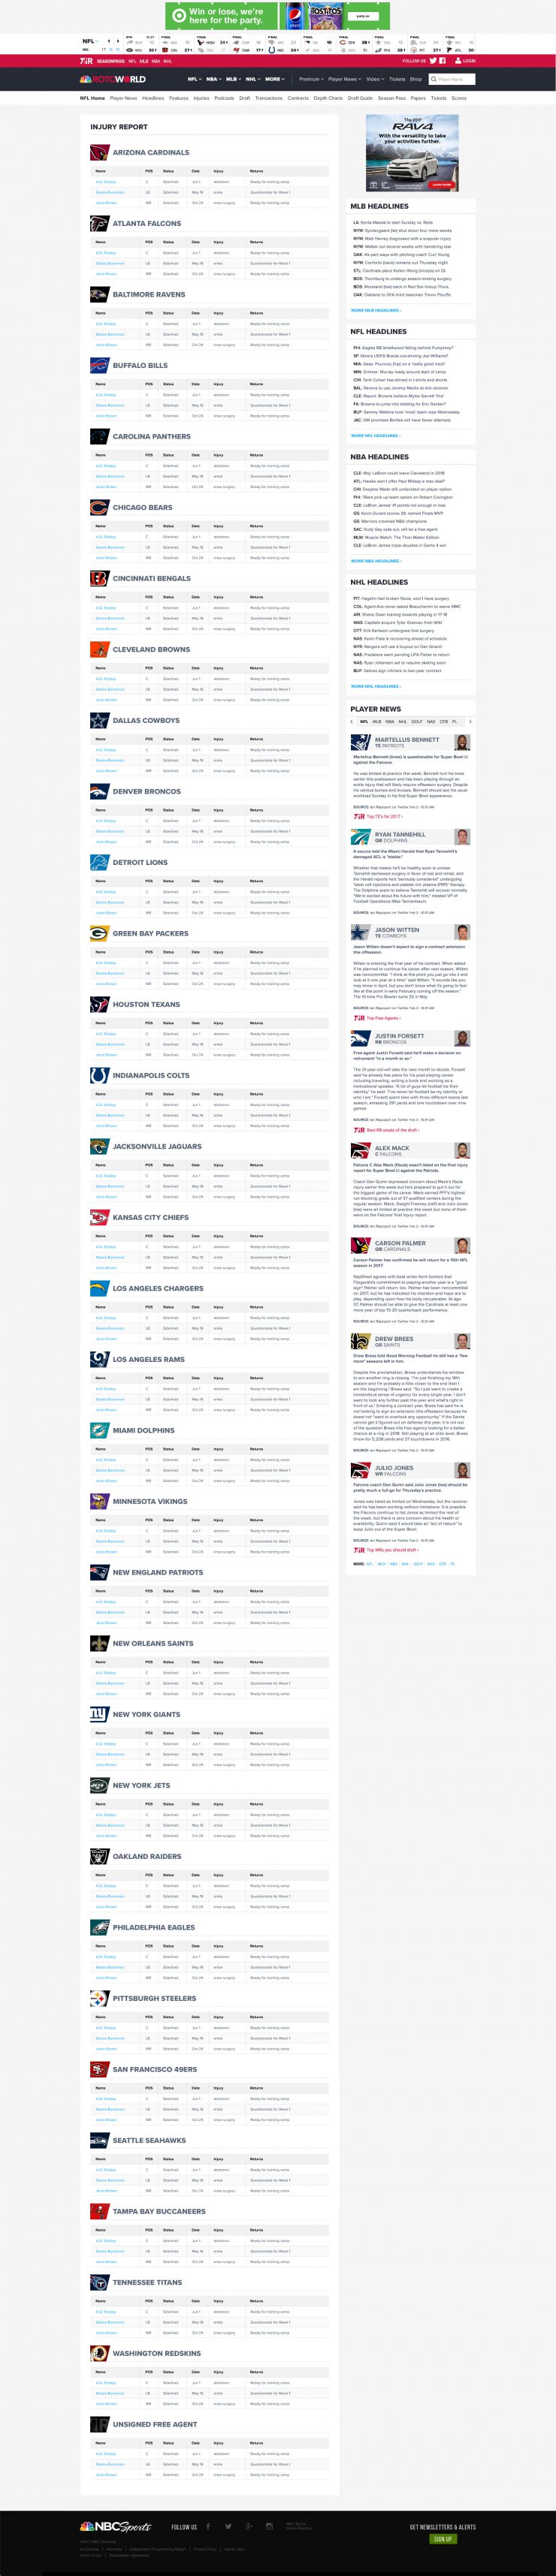 2018 NBC Sports RotoWorld Desktop Redesign